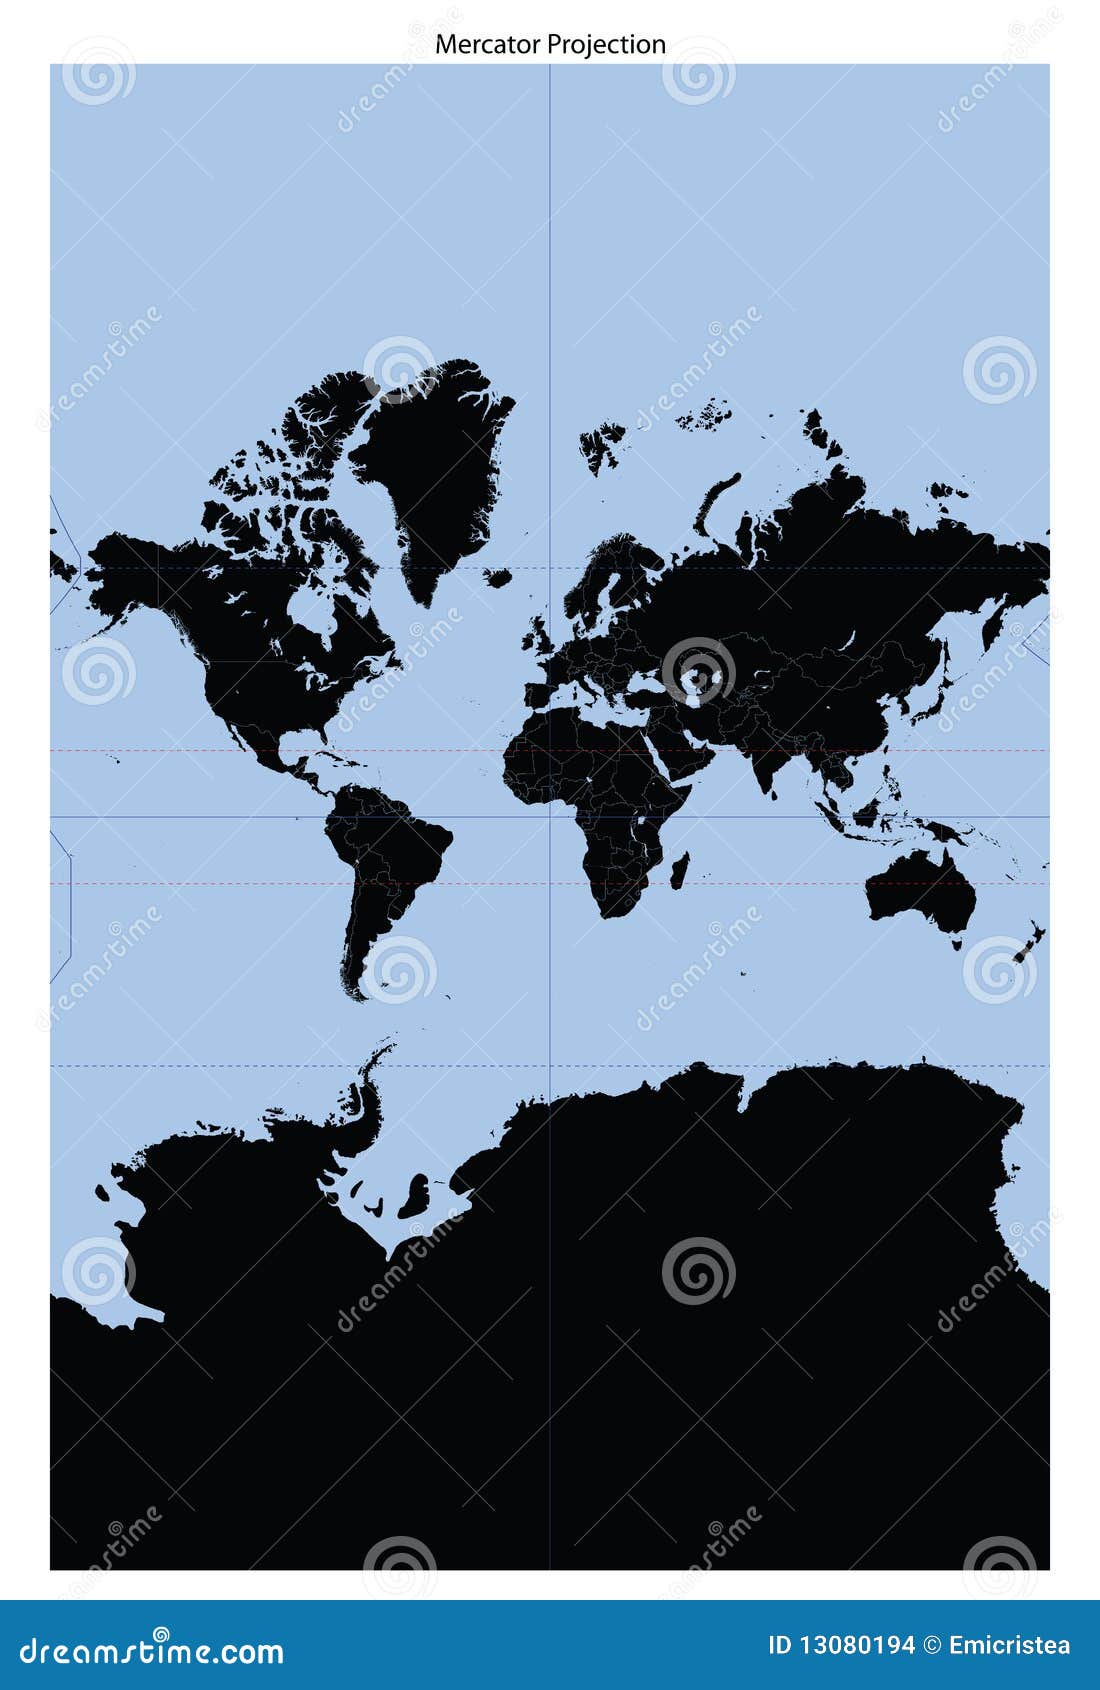 world map (mercator projection)